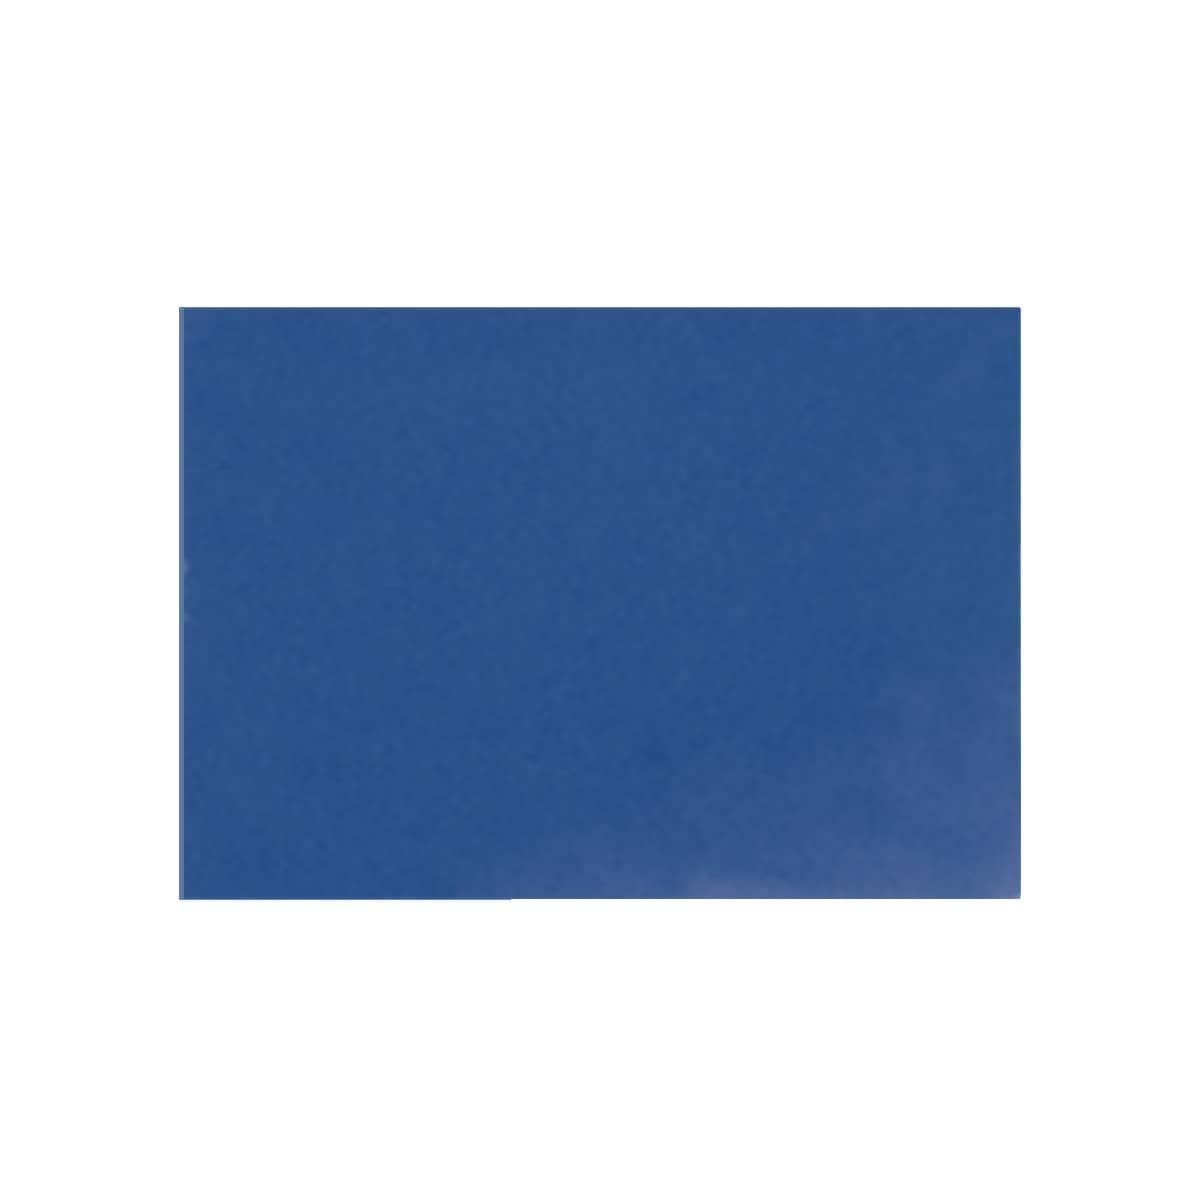 Daler-Rowney F.W. Acrylic Ink 1oz - Rowney Blue